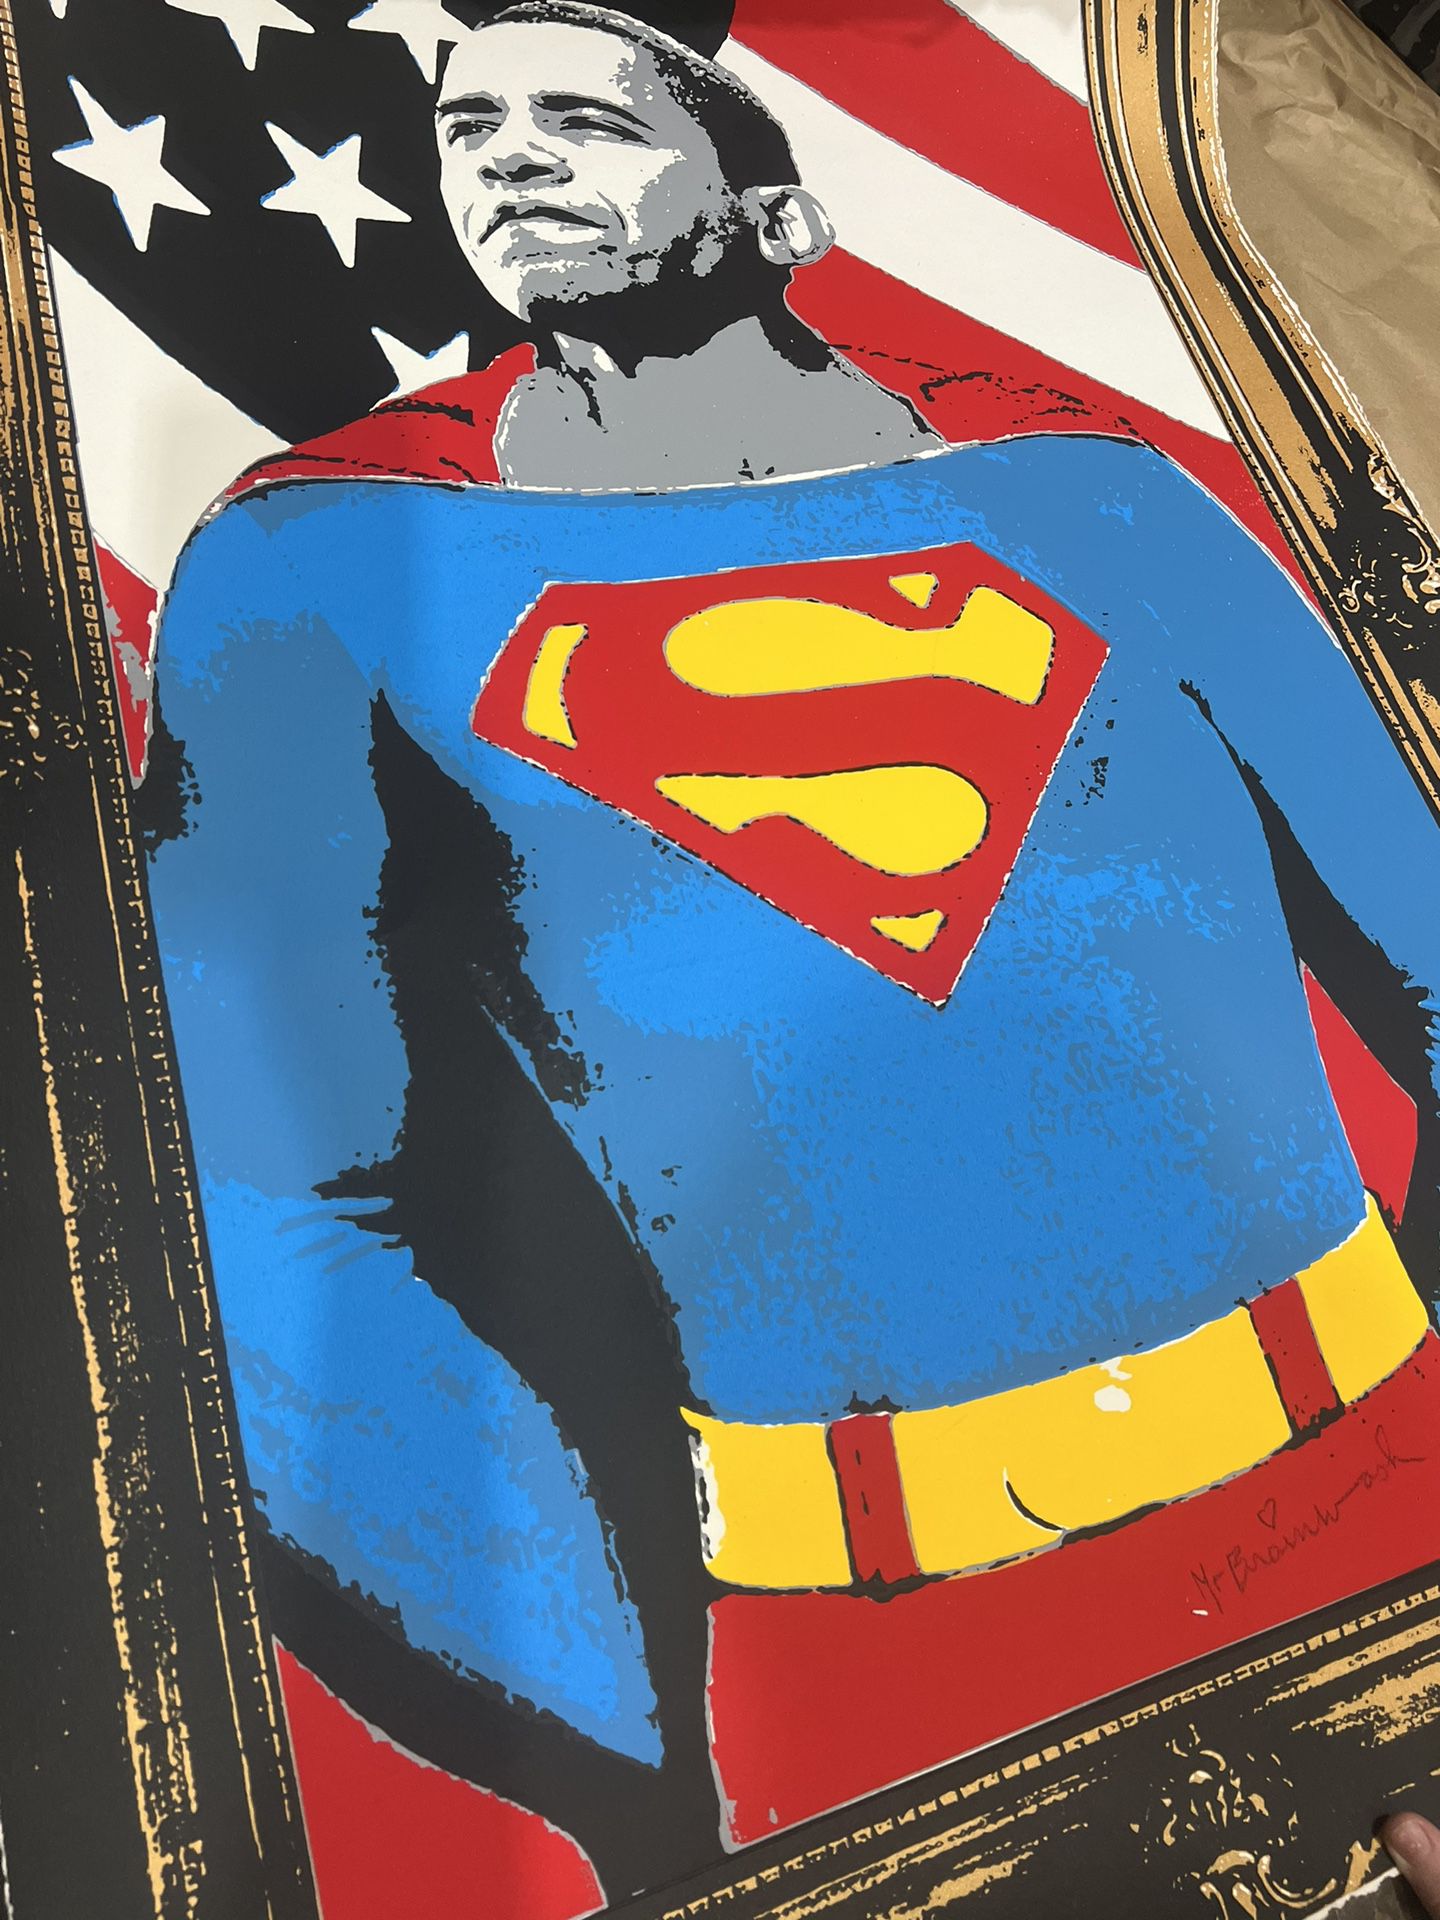 MR BRAINWASH ‘OBAMA SUPERMAN' GOLD SIGNED SILKSCREEN PRINT 2008-